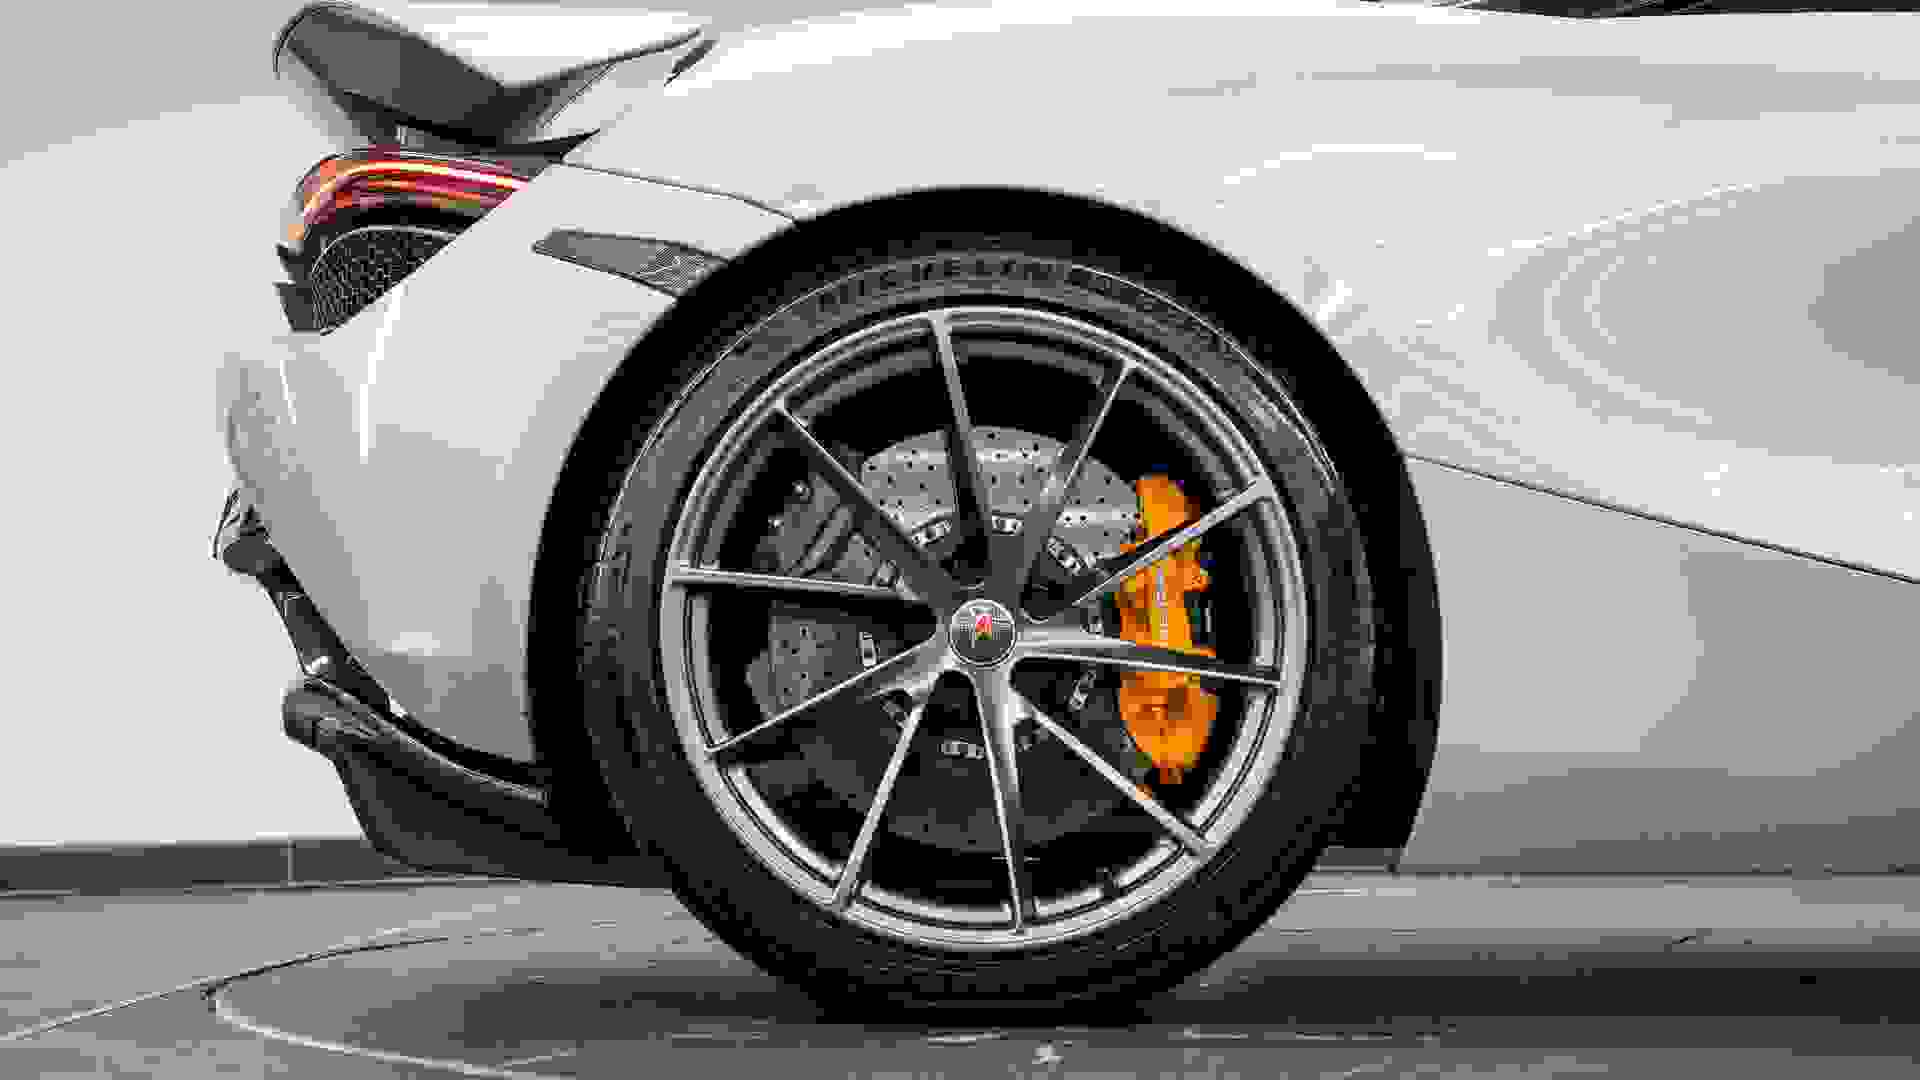 McLaren 720S Photo 4dc92d13-27c9-4952-98c9-d4a5421c847c.jpg